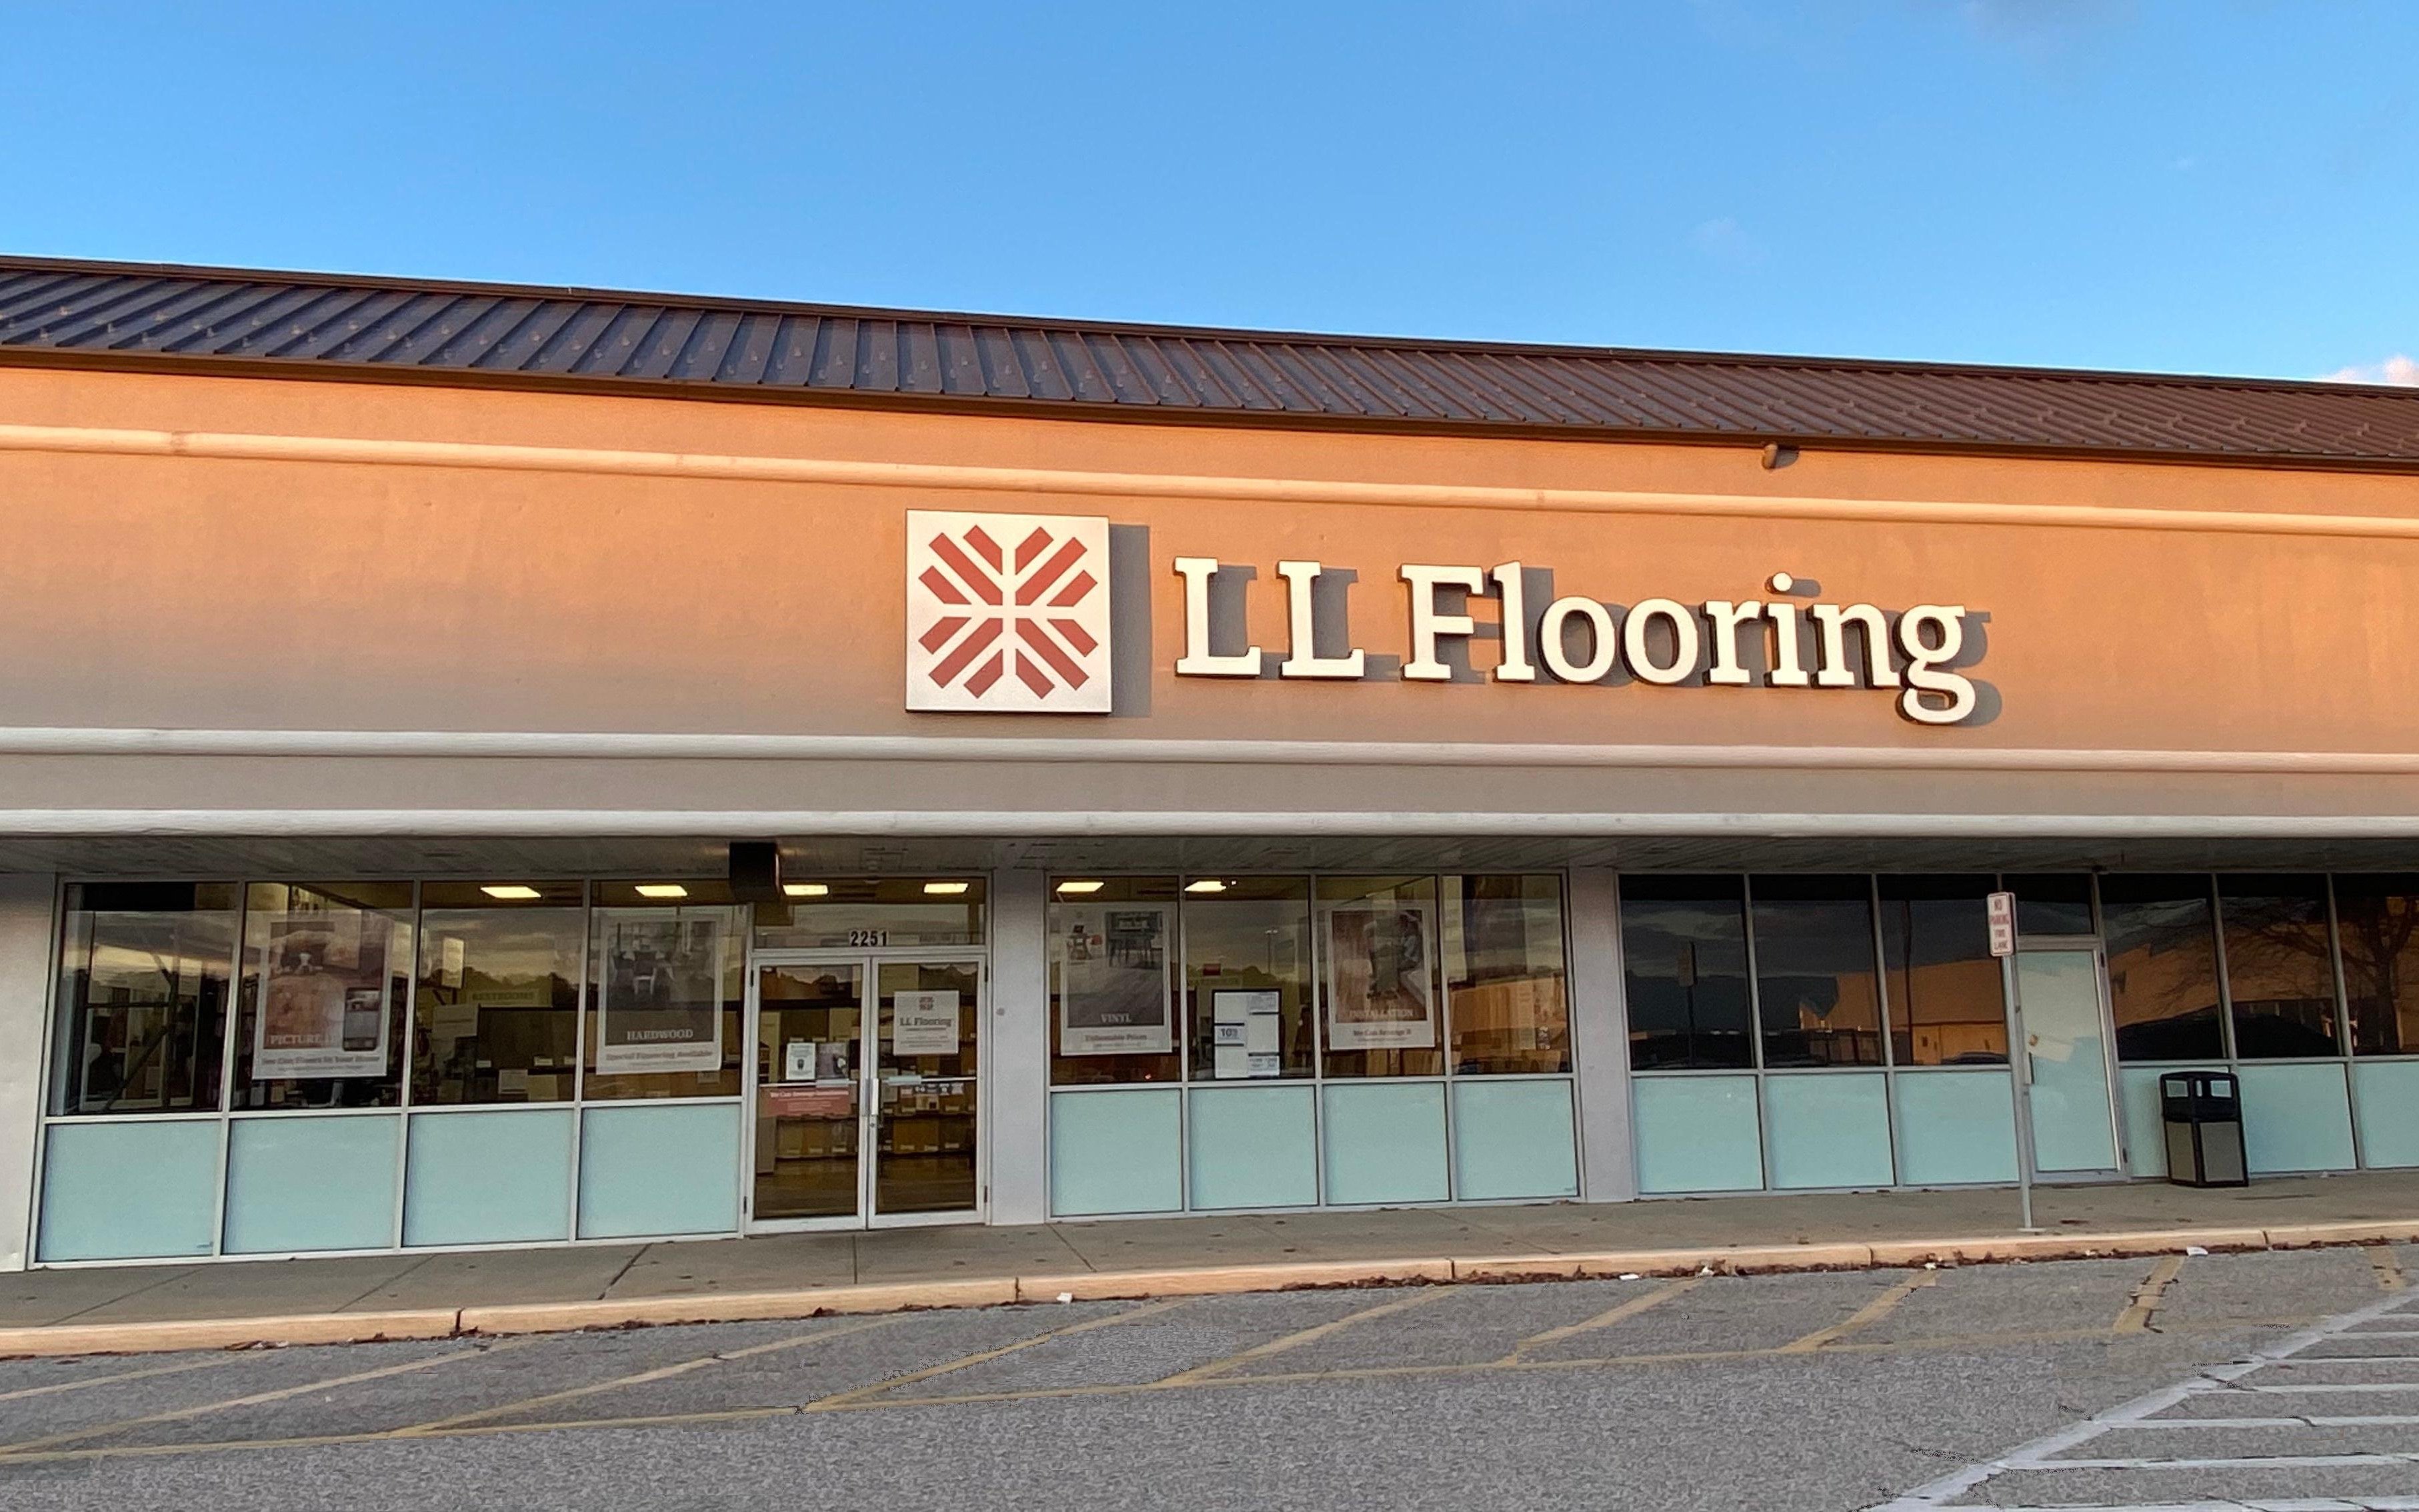 LL Flooring #1289 Millville | 2251 N 2nd Street | Storefront